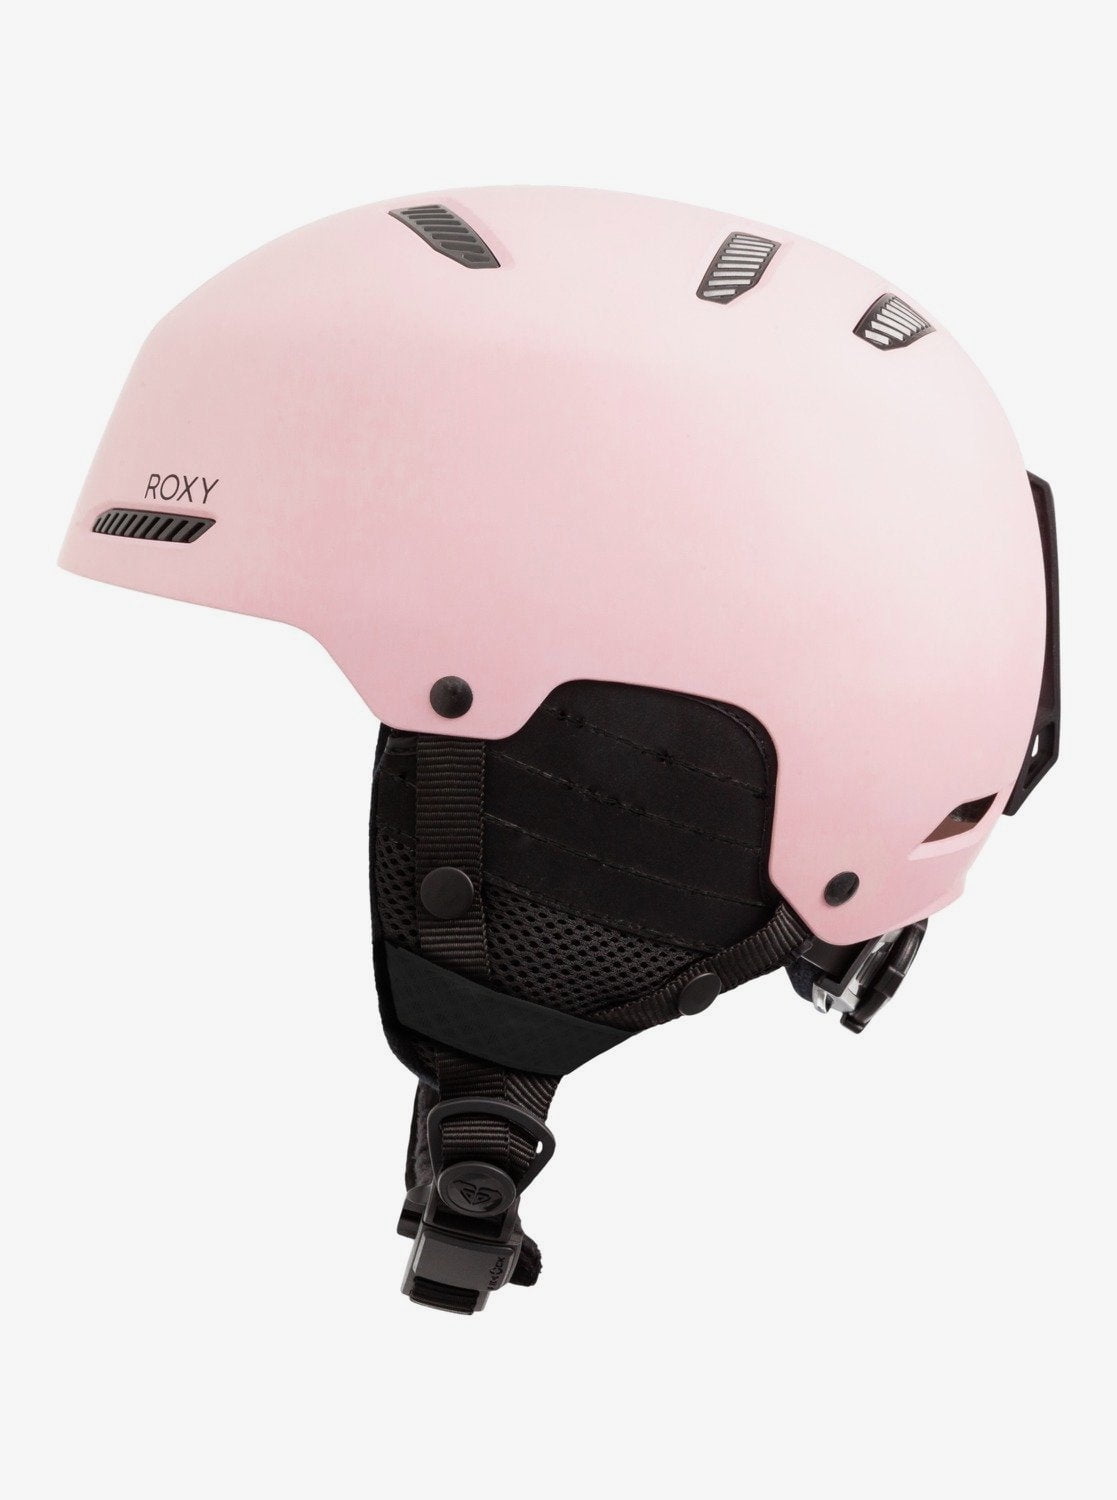 Roxy Freebird Snow Helmet - Women's 